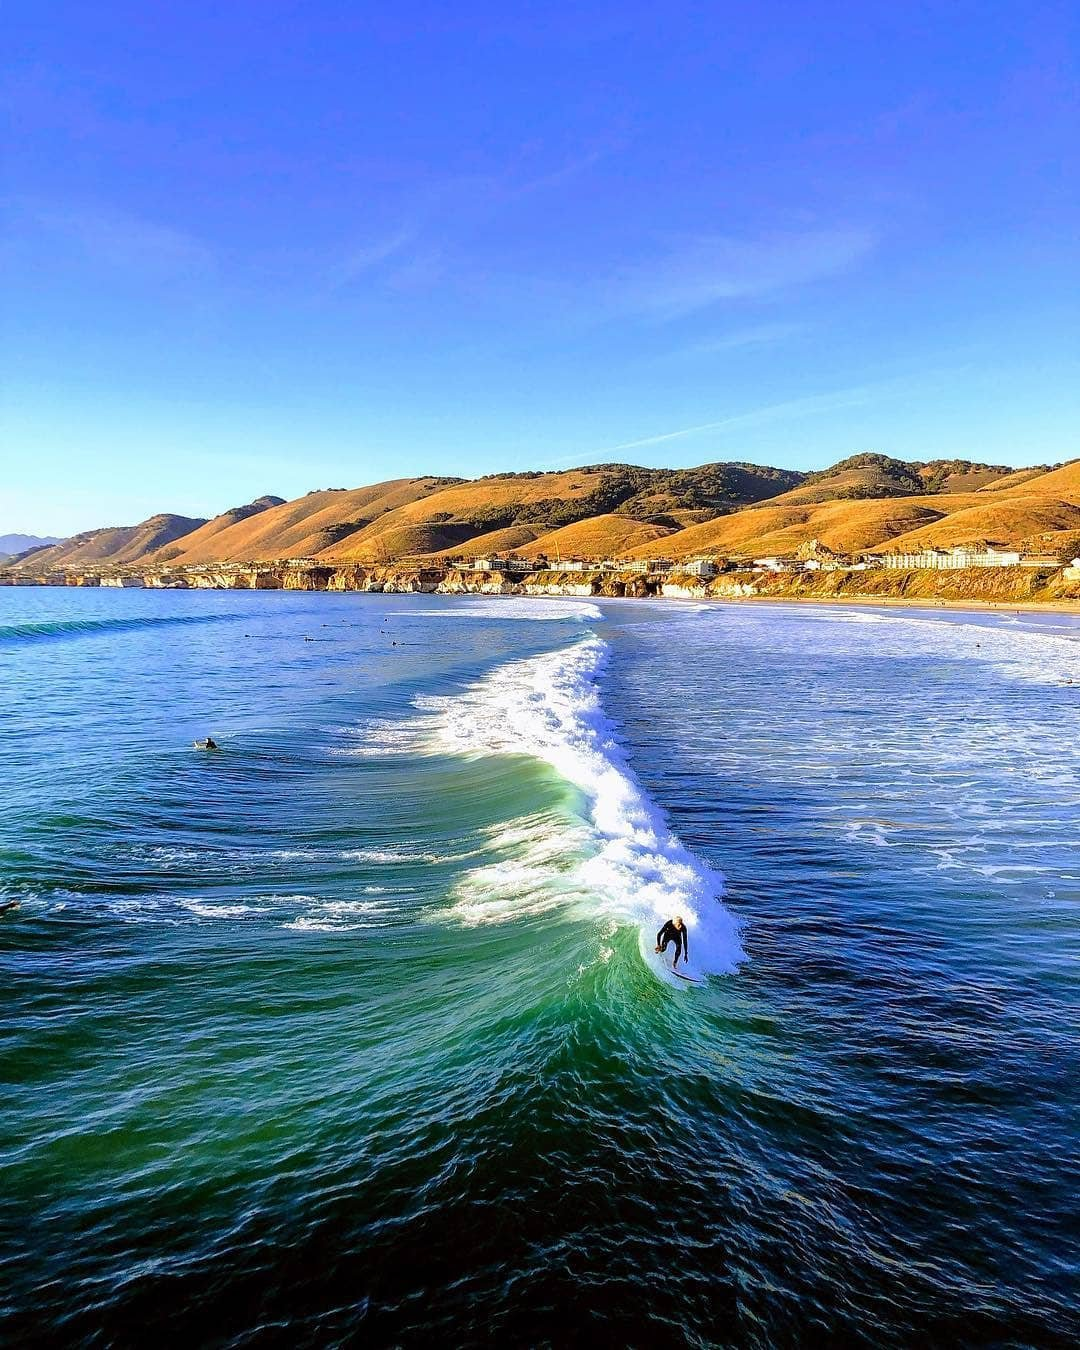 Surfing wave in Pismo Beach, California